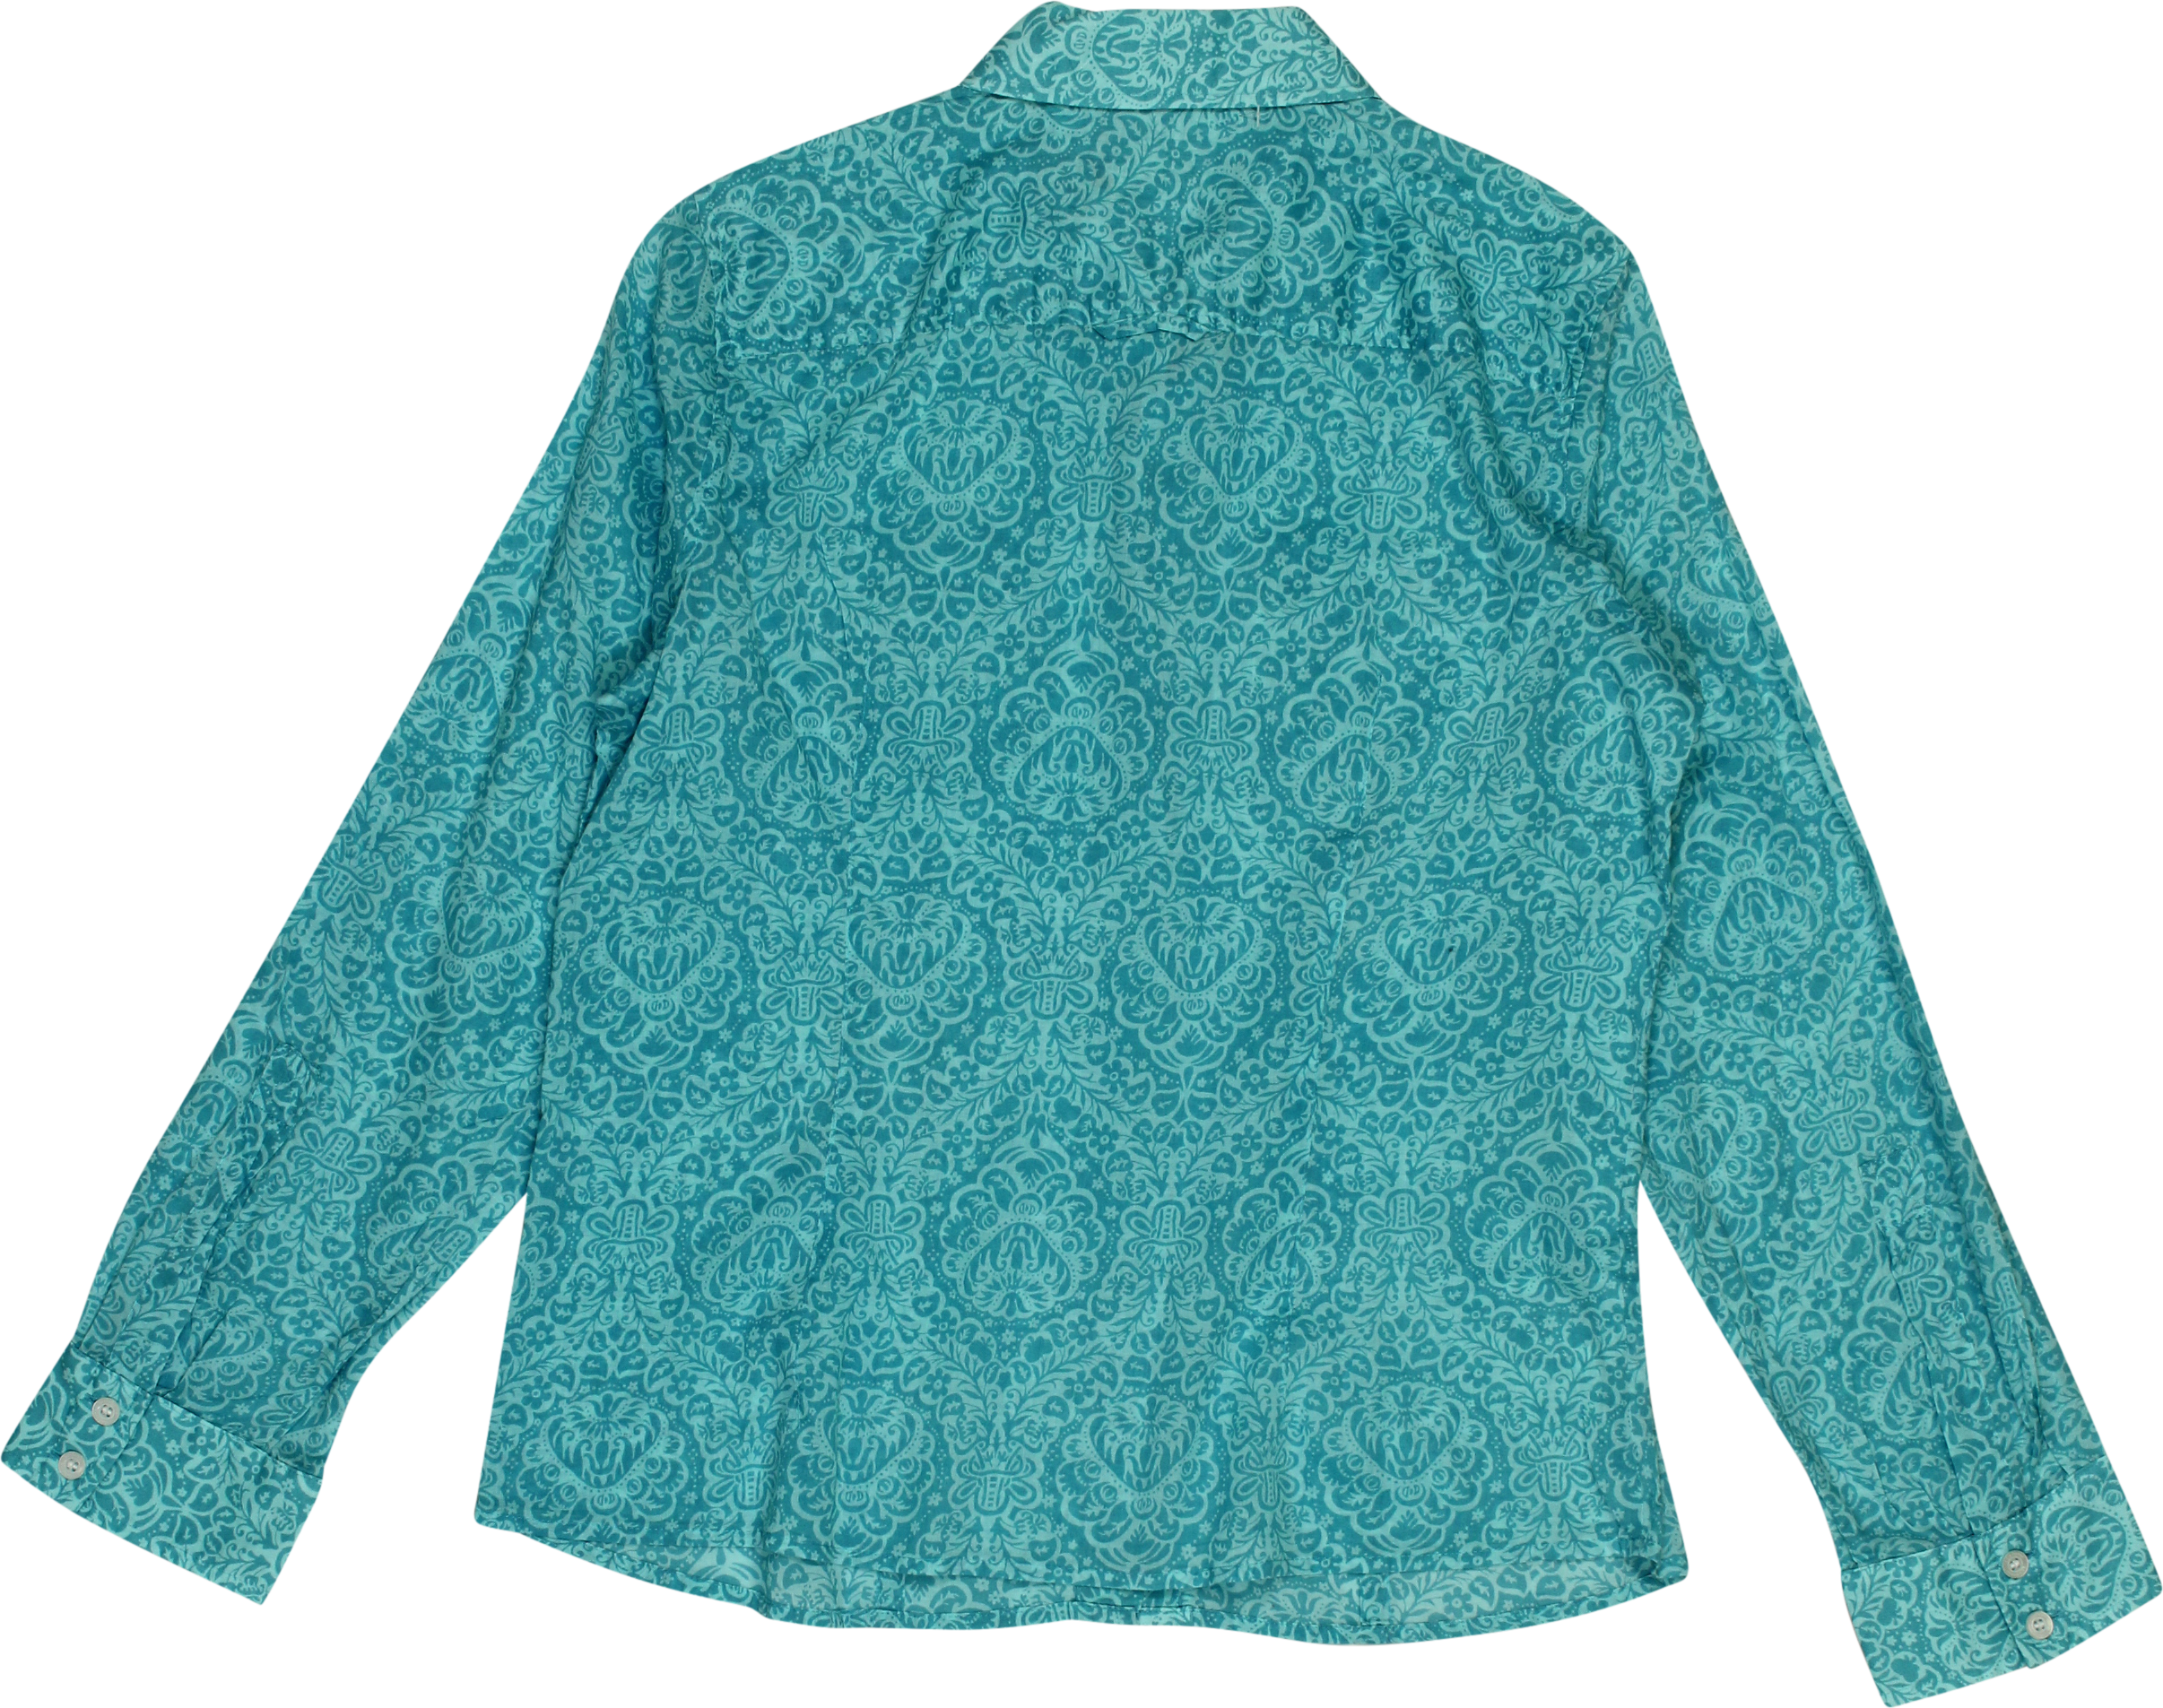 Liz Claiborne - Blue Shirt- ThriftTale.com - Vintage and second handclothing